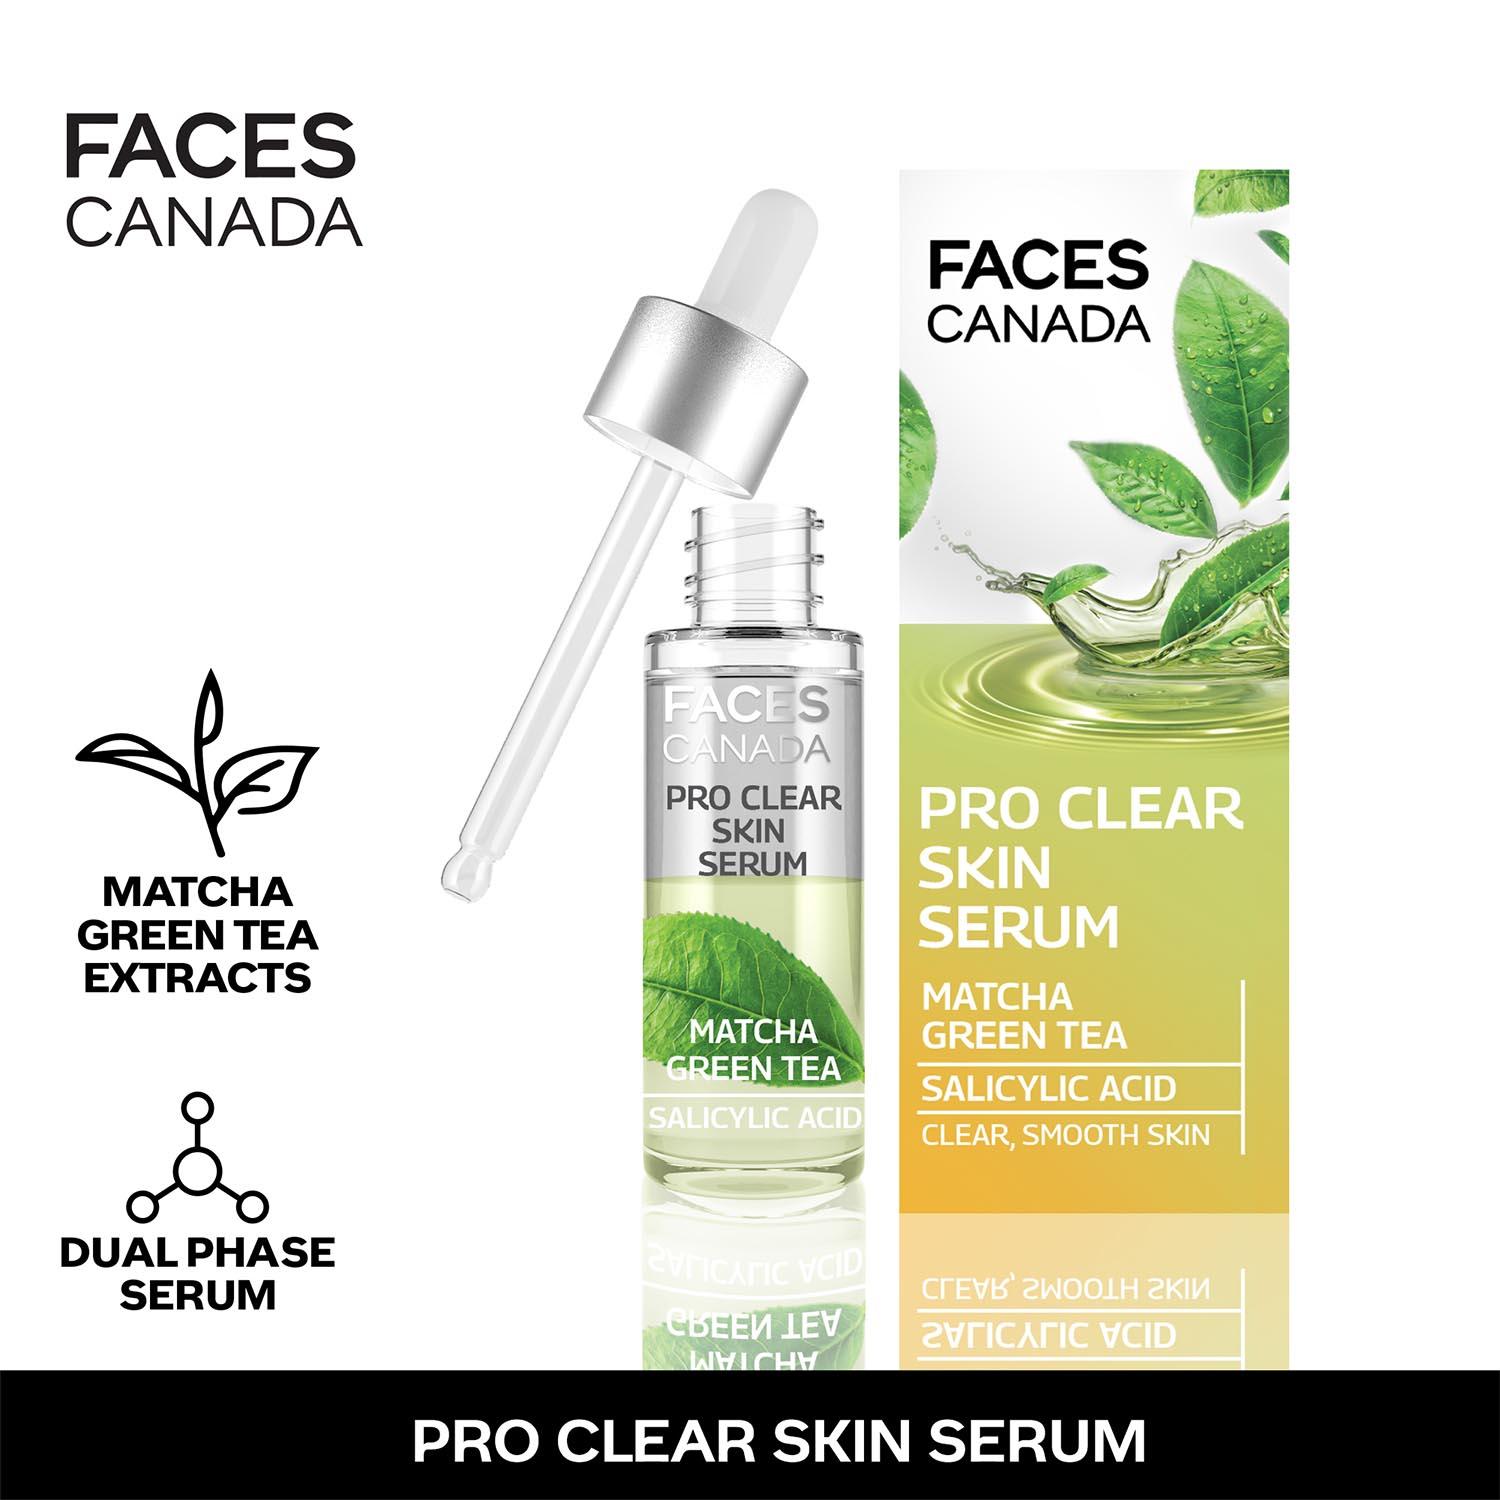 Faces Canada | Faces Canada Pro Clear Skin Serum Matcha Green Tea I Biphasic I Fights Acne I Salicylic Acid I (27 ml)